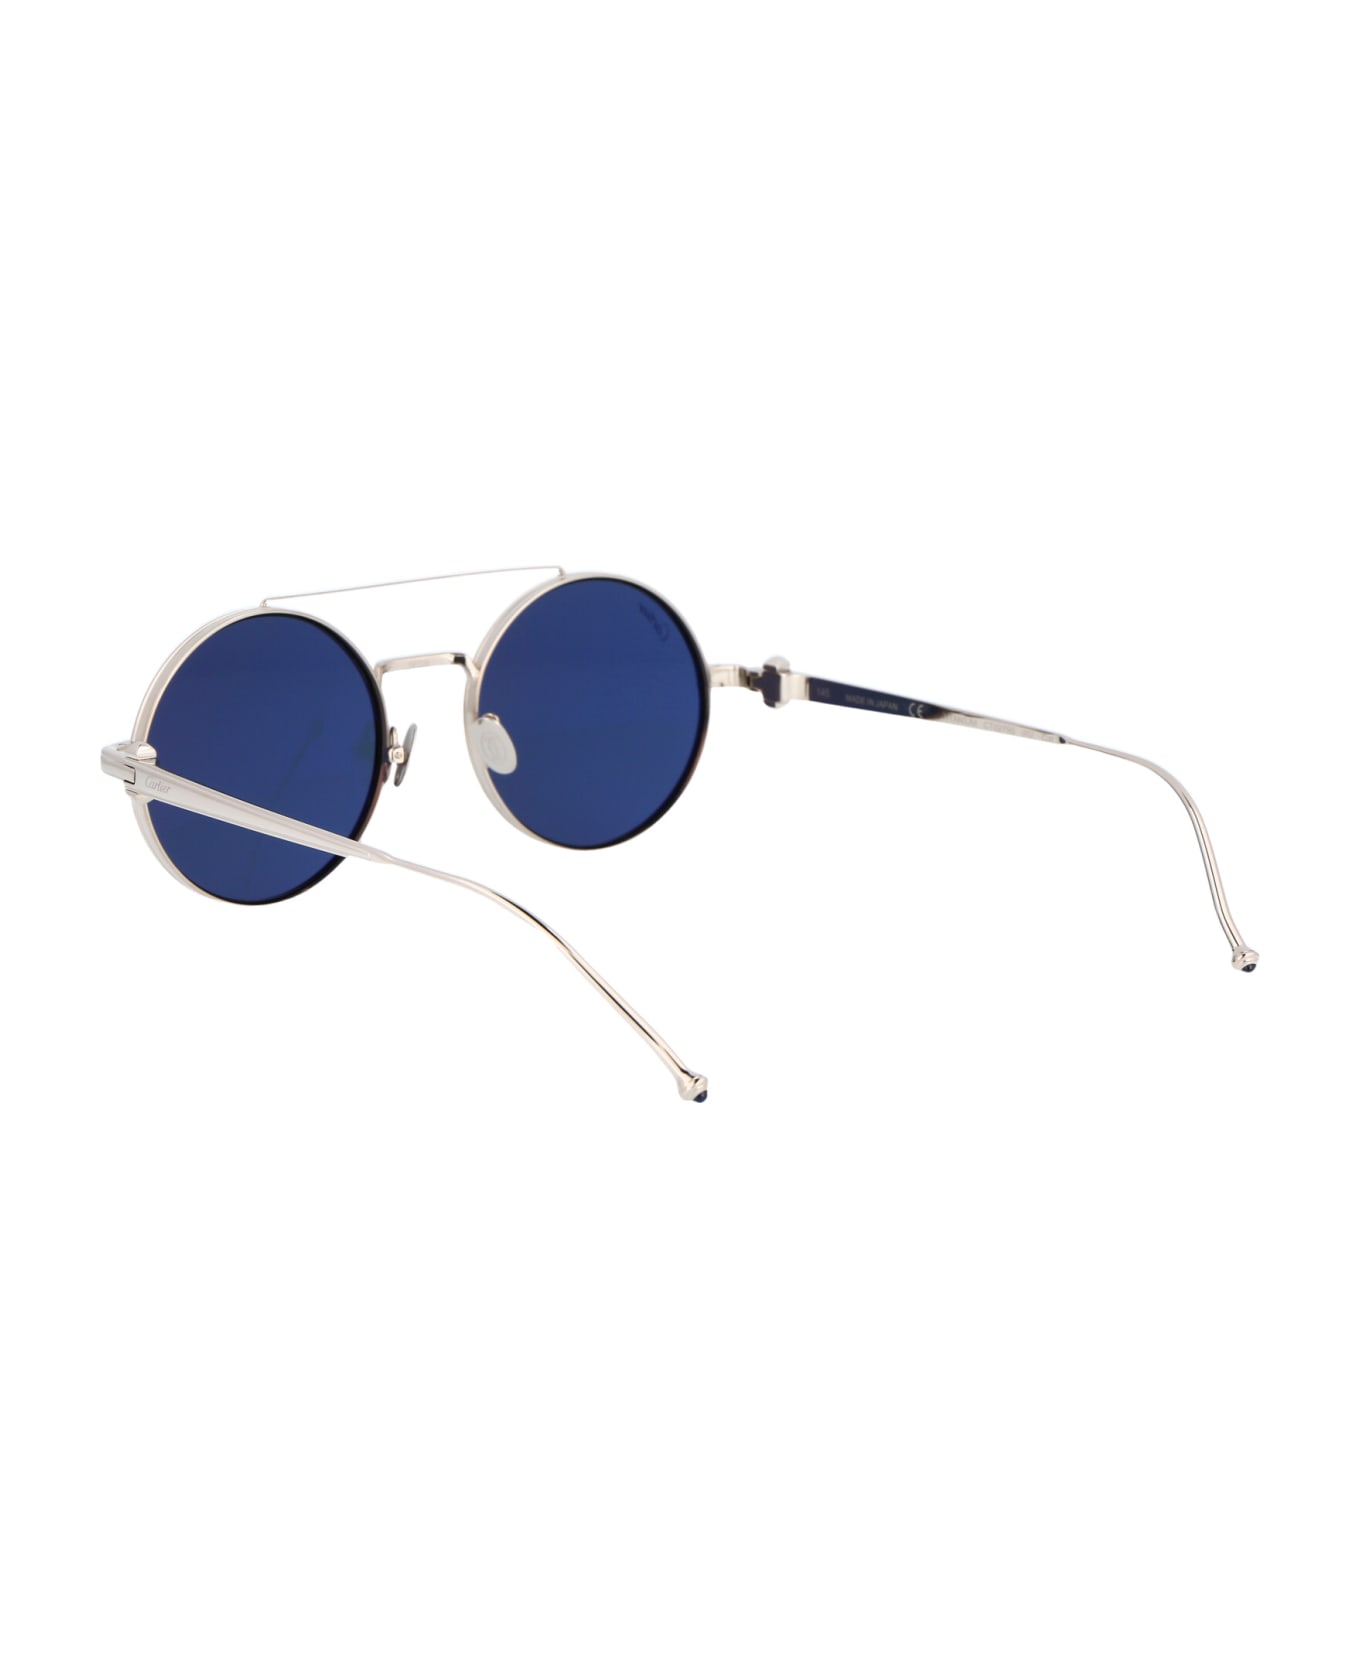 Cartier Eyewear Ct0279s Sunglasses - 002 SILVER SILVER LIGHT BLUE